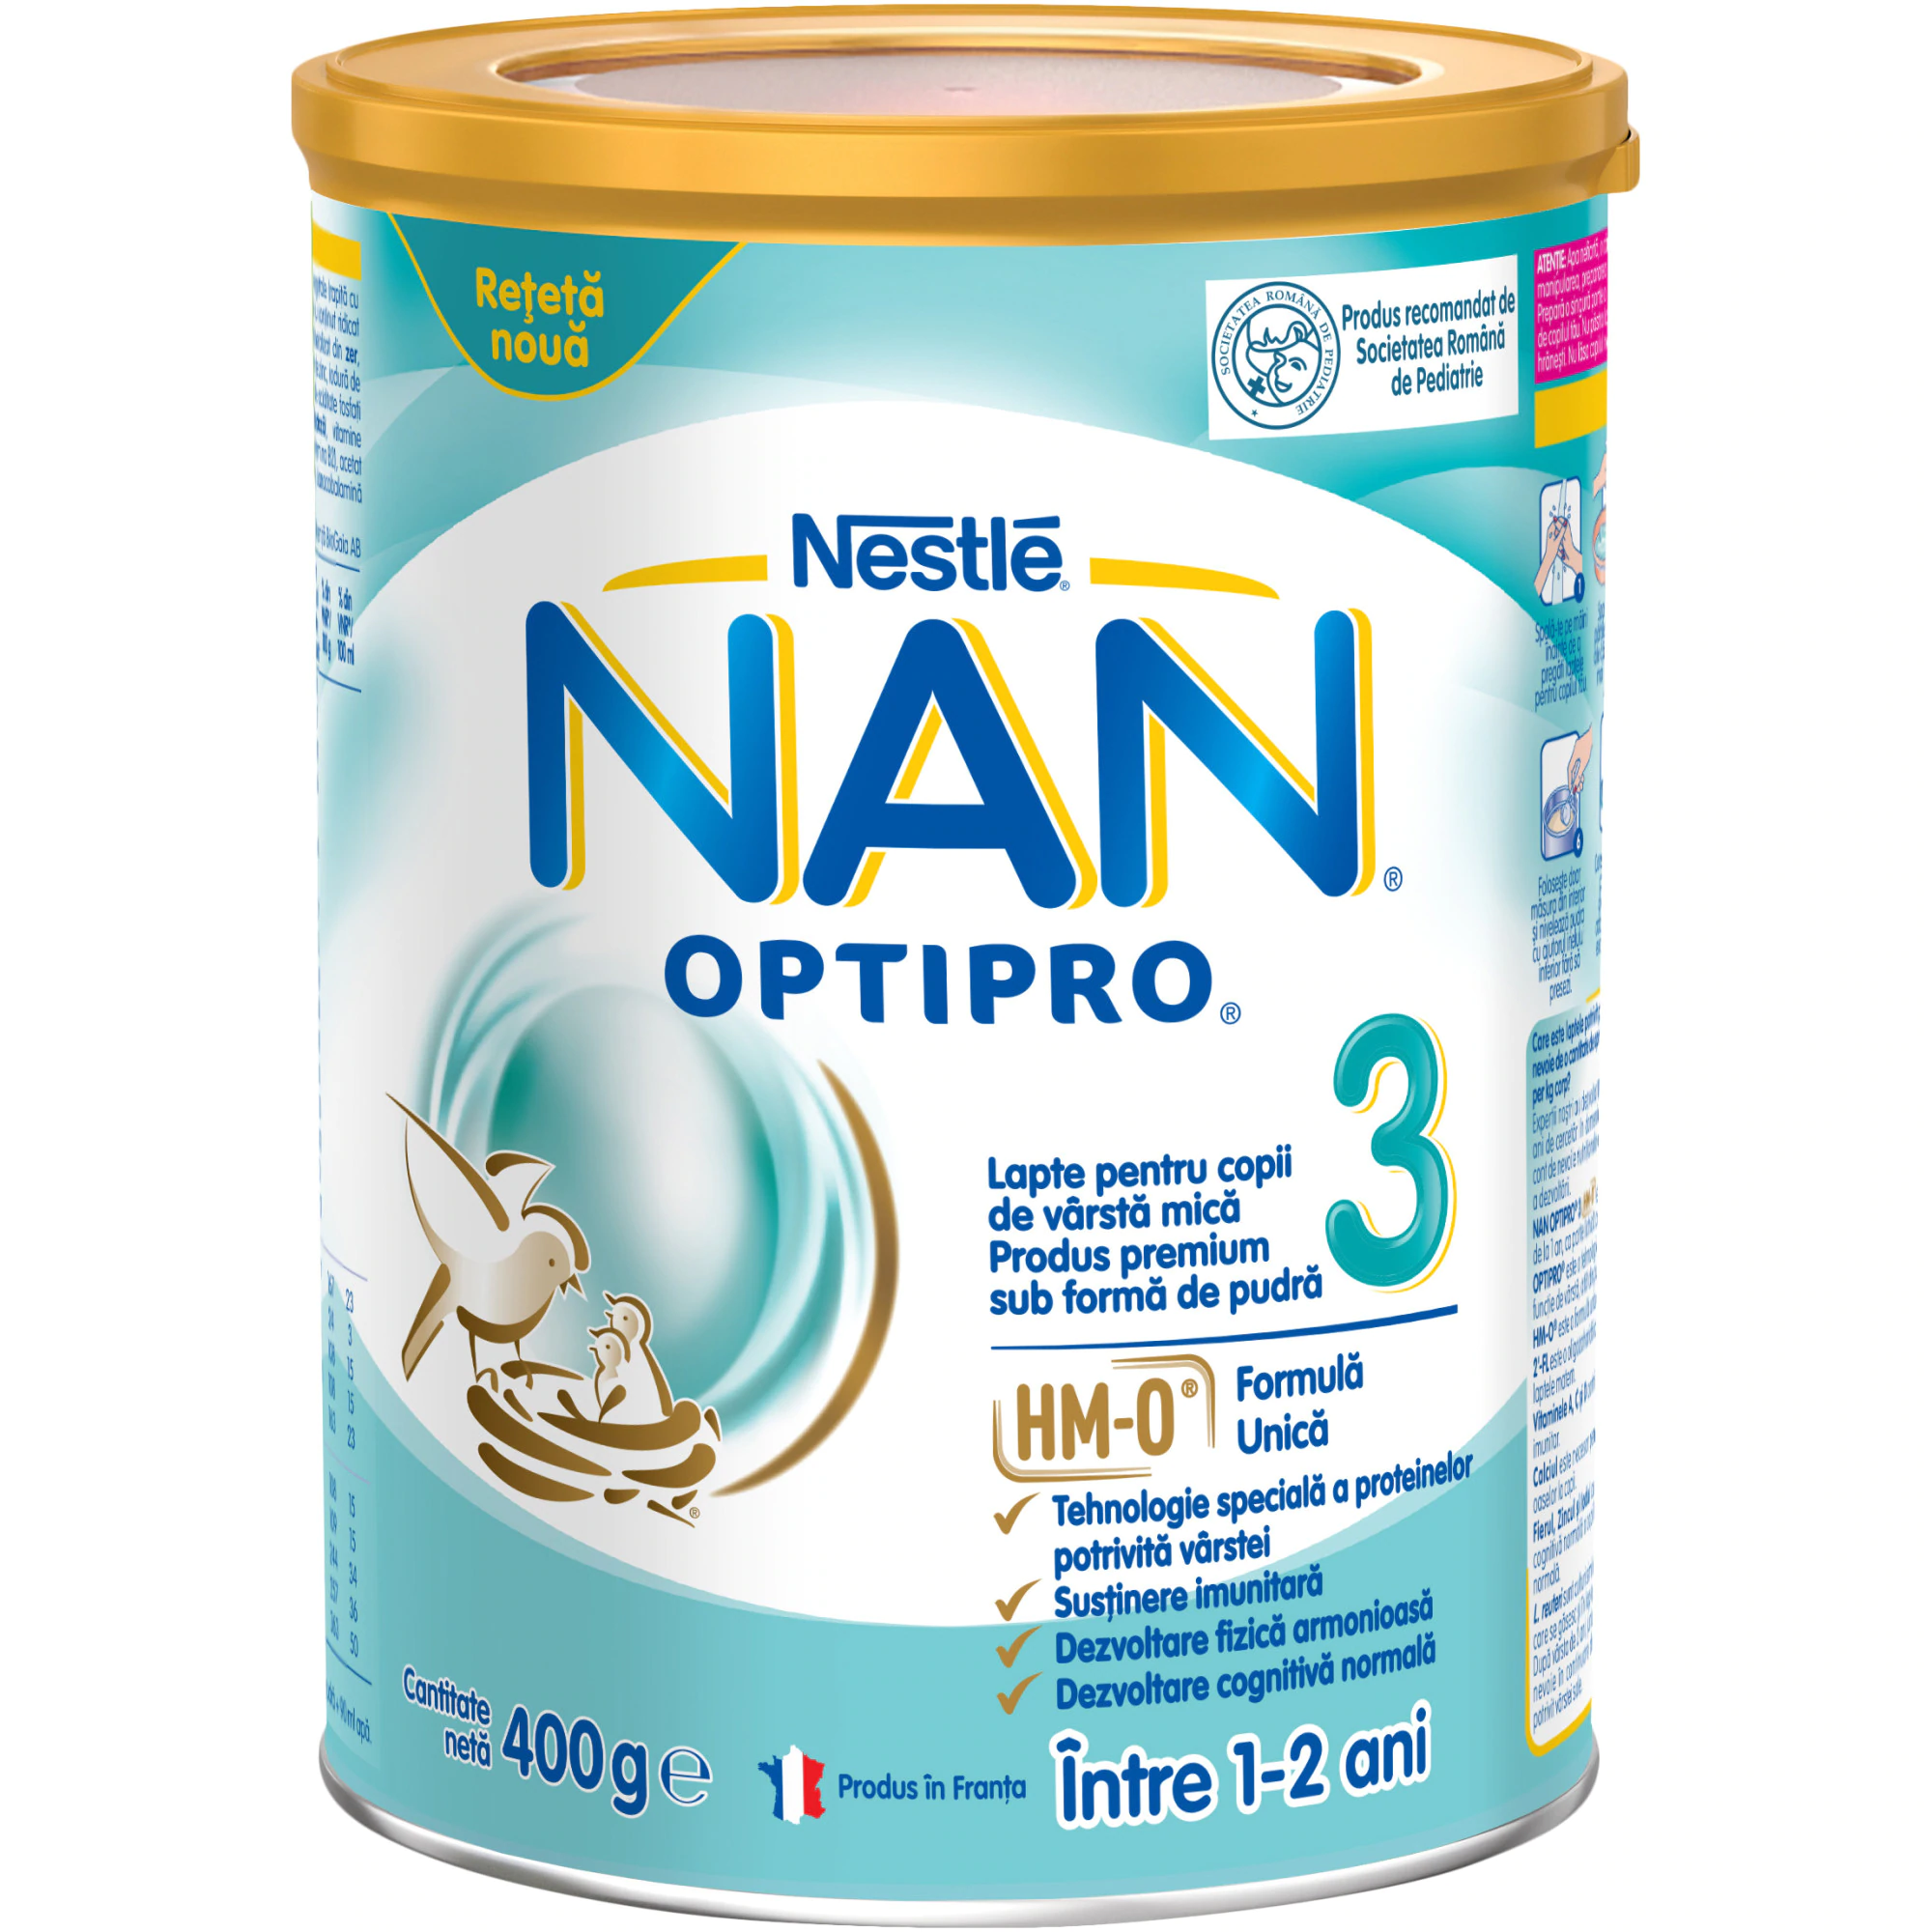 Formule de lapte praf - NAN 3 Optipro, formula lapte praf 1-2 ani, 400 grame, medik-on.ro